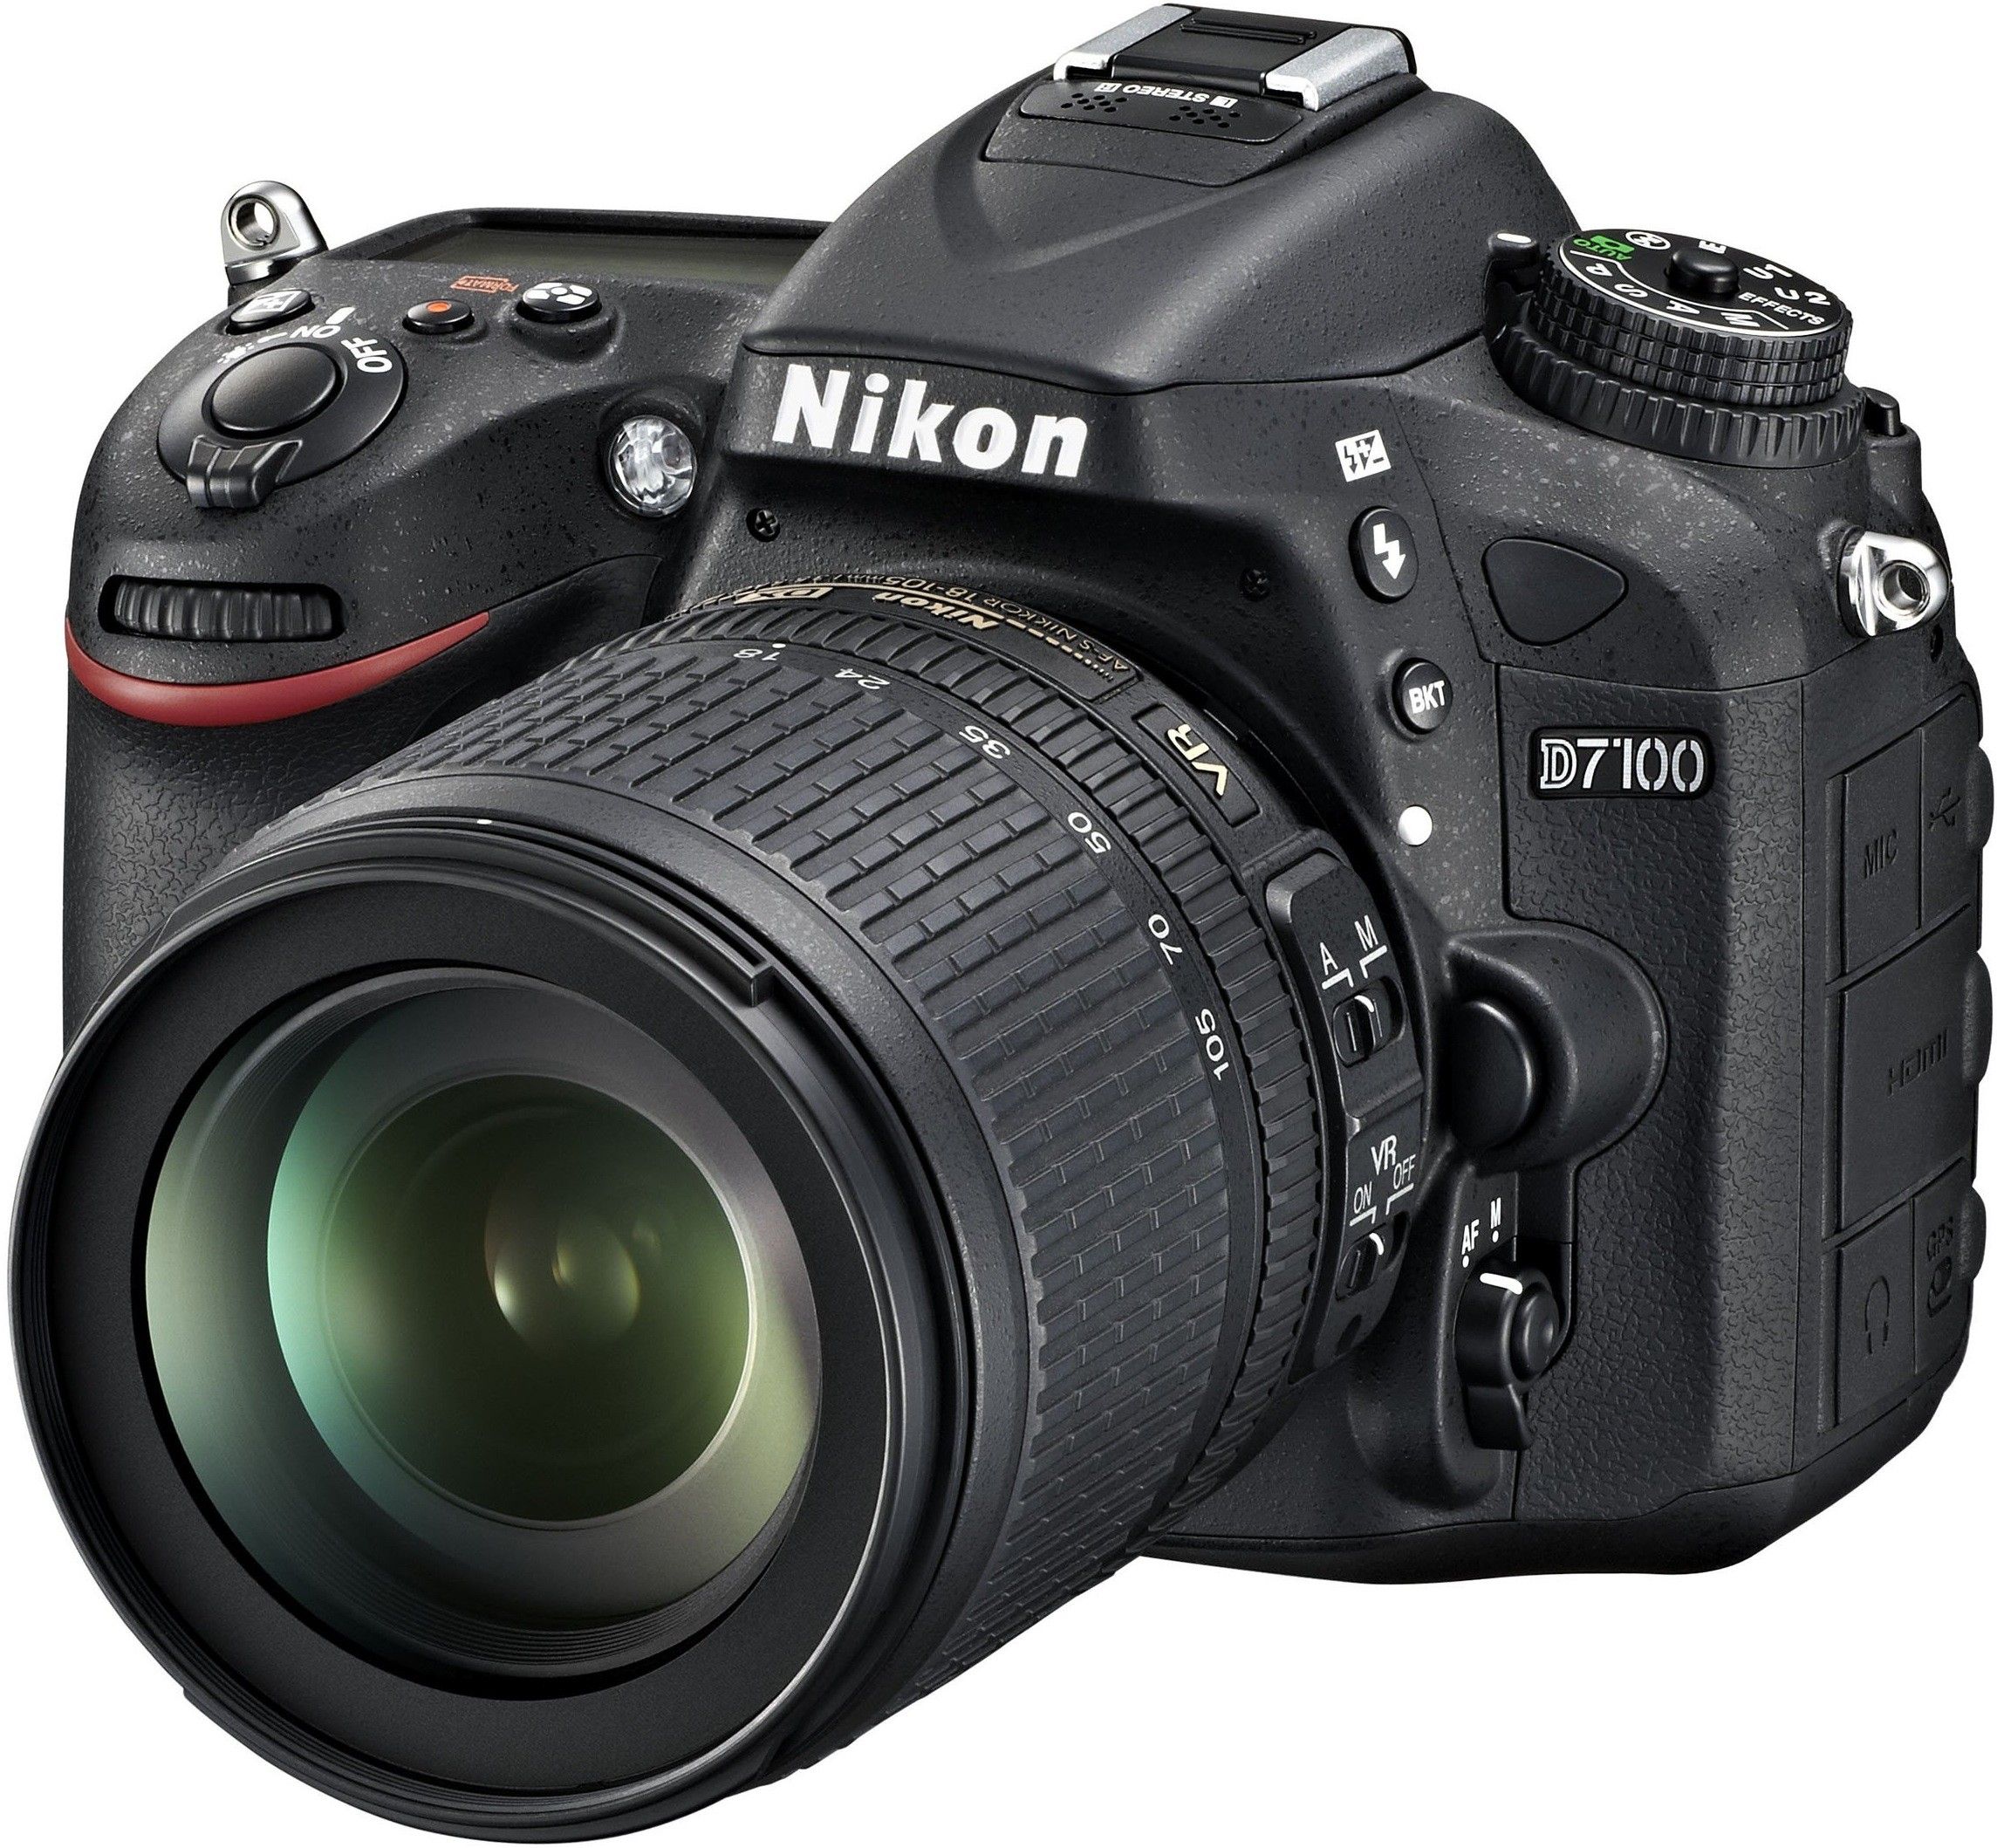 Nikon Announces the D7100 1,200 Gets You an APSC SemiPro DSLR with